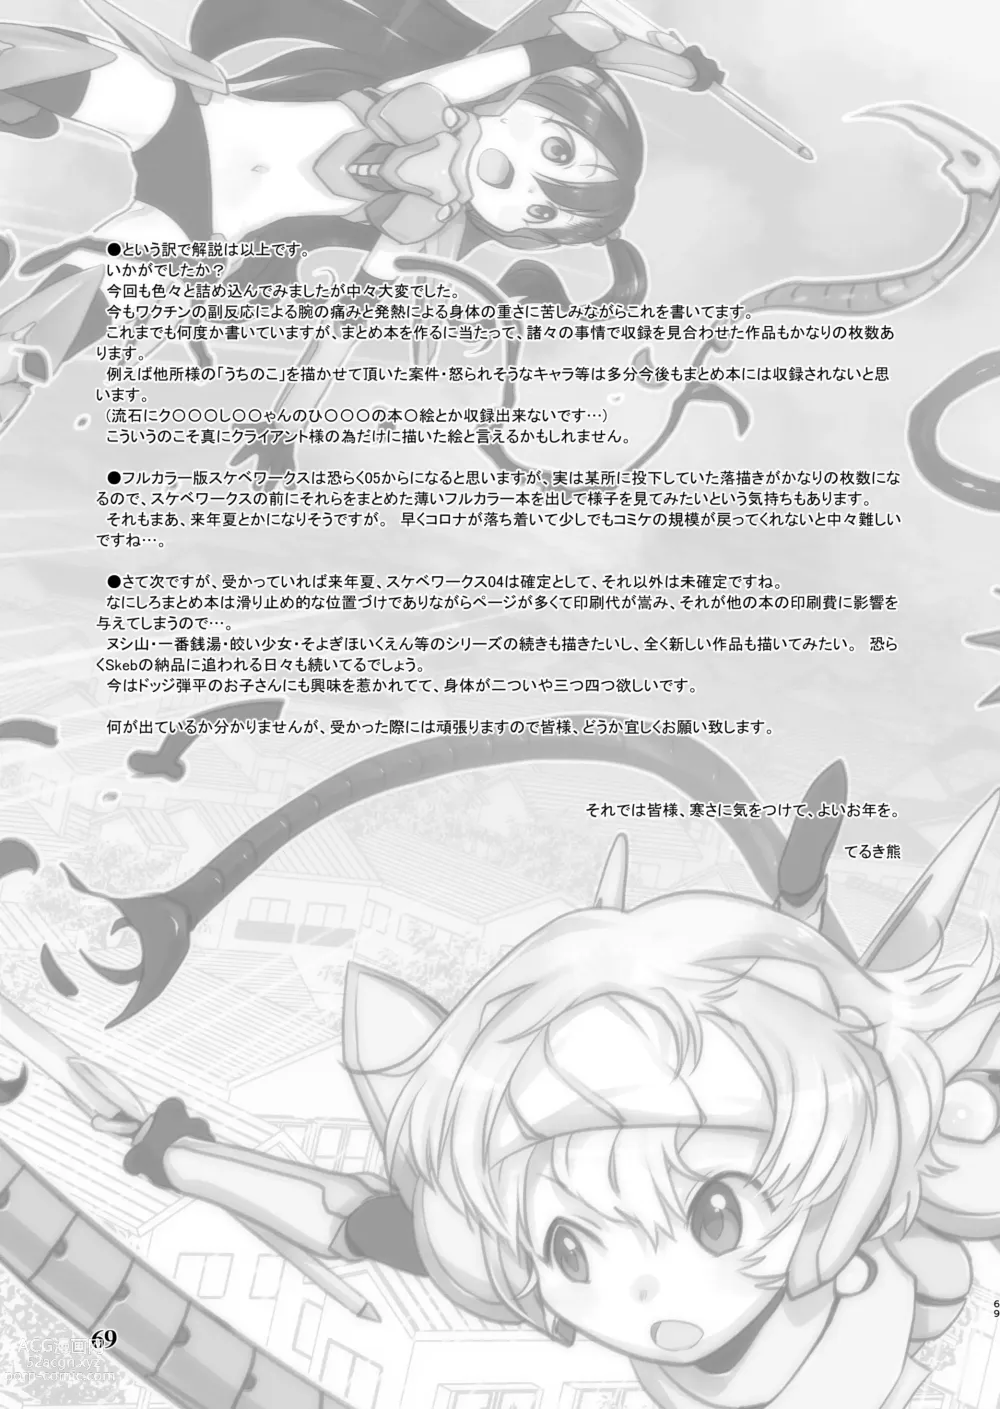 Page 69 of doujinshi Skeb-e Works 03